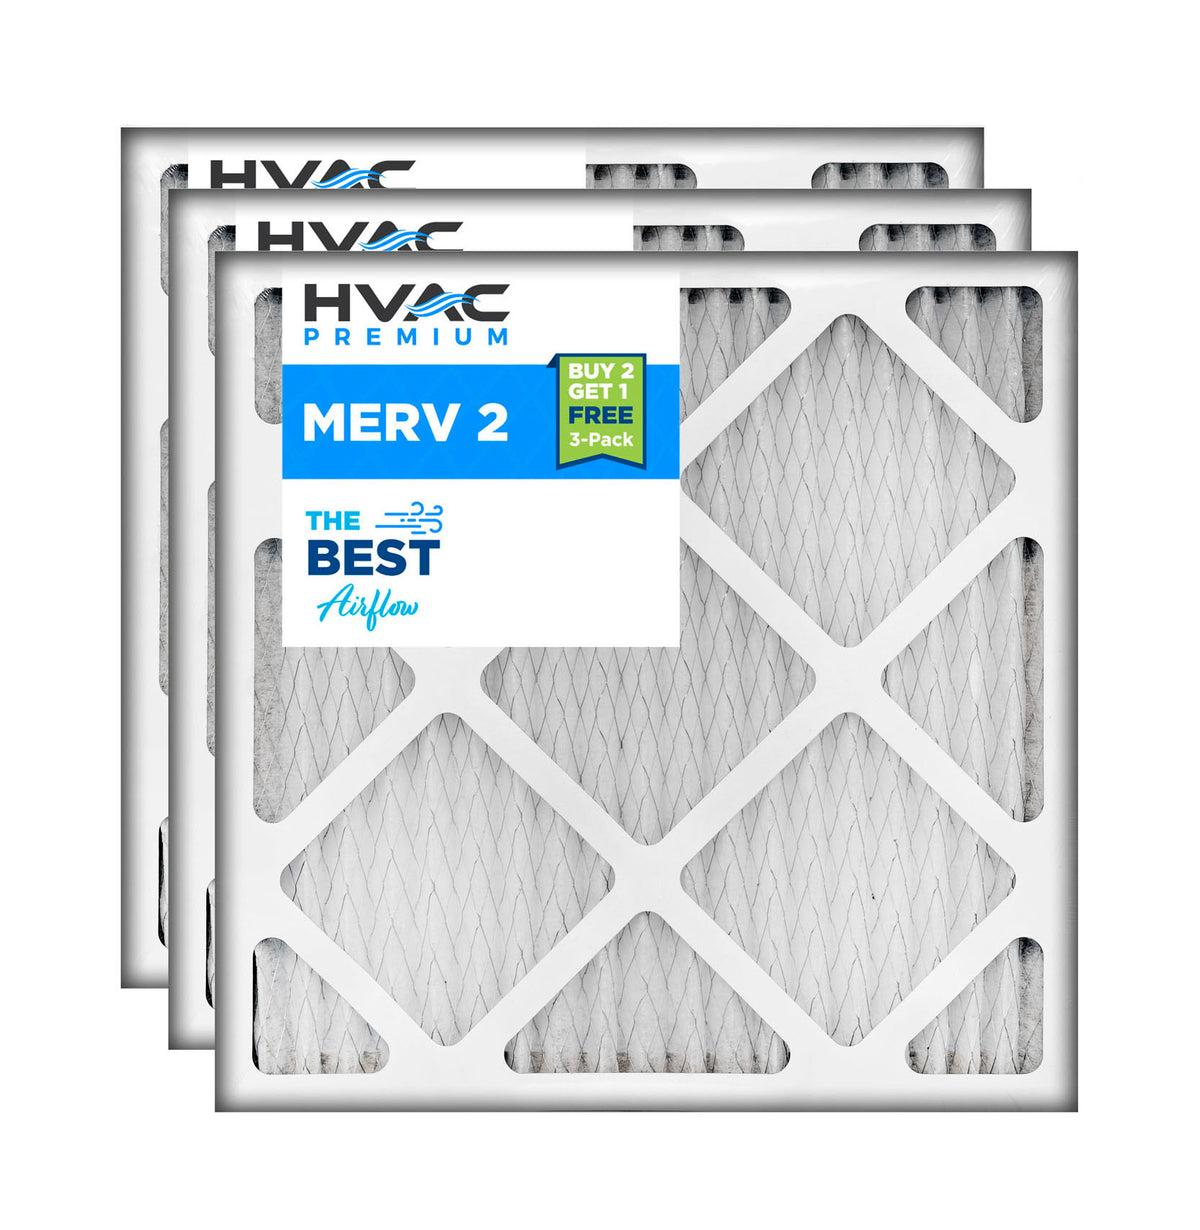 20 x 16 Merv 2 HVAC Pleated Filter, 12-Pack